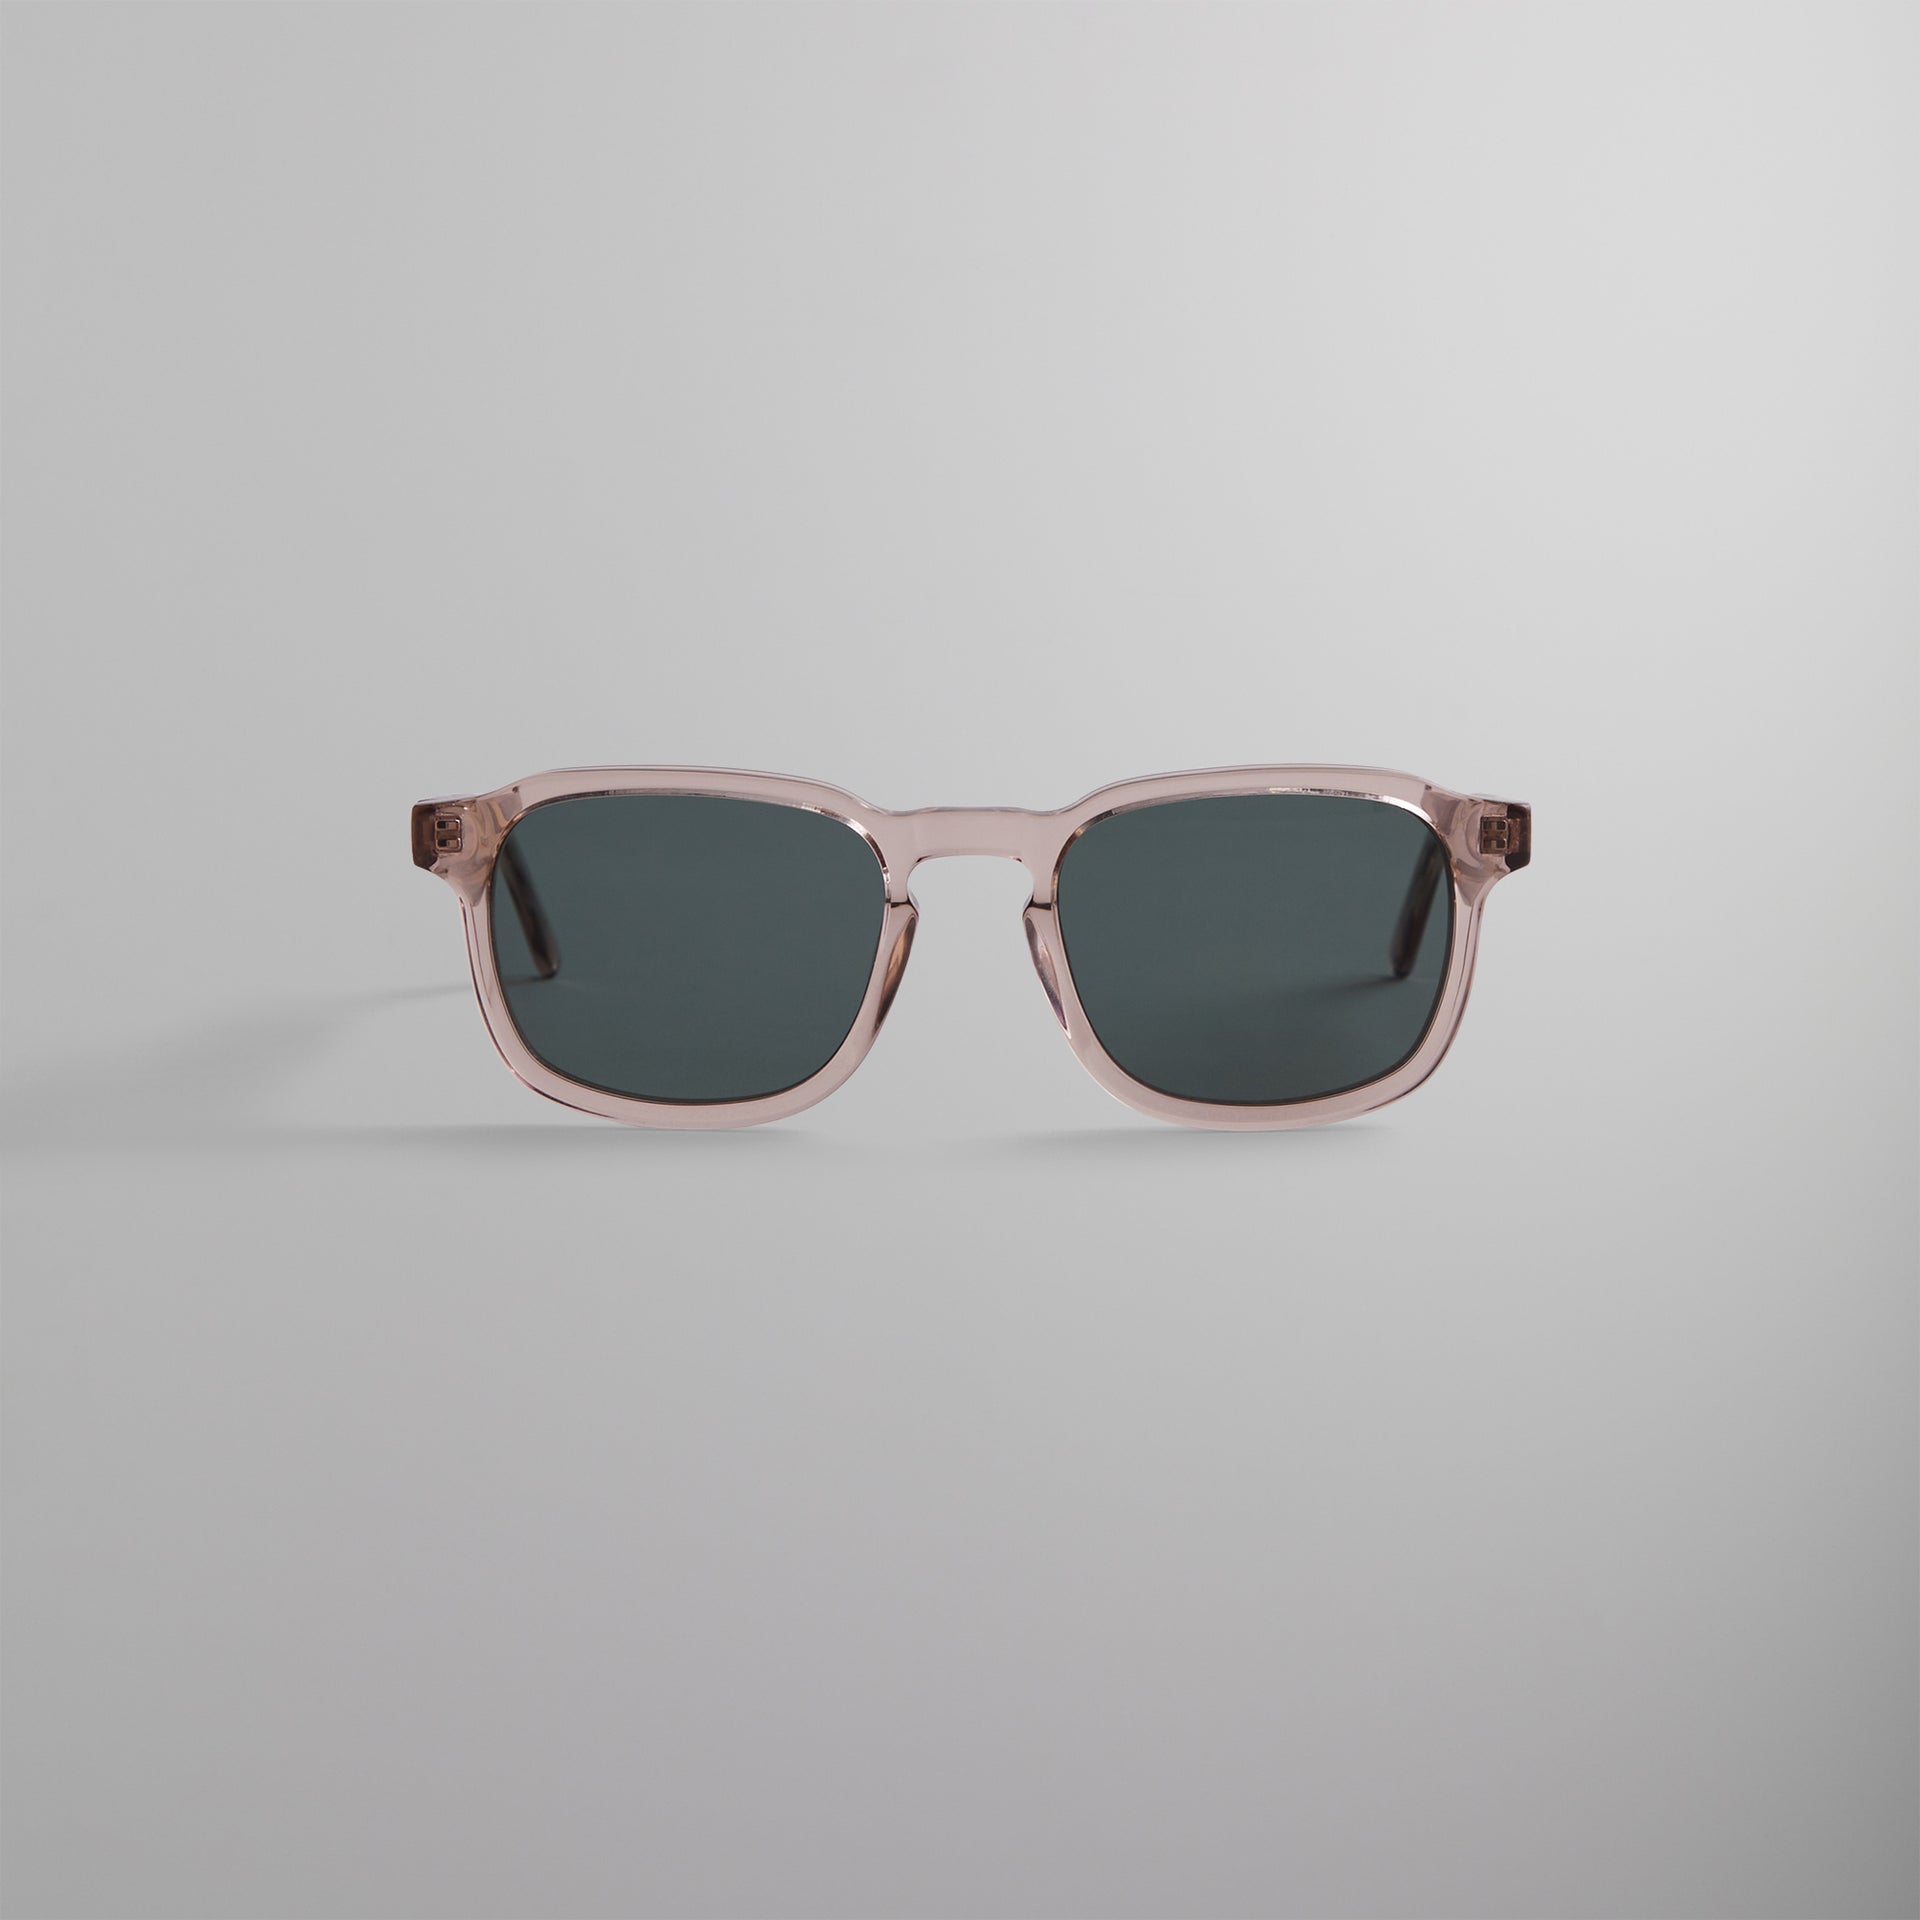 Erlebniswelt-fliegenfischenShops Napeague Sunglasses frame - Honey Crystal / Grey